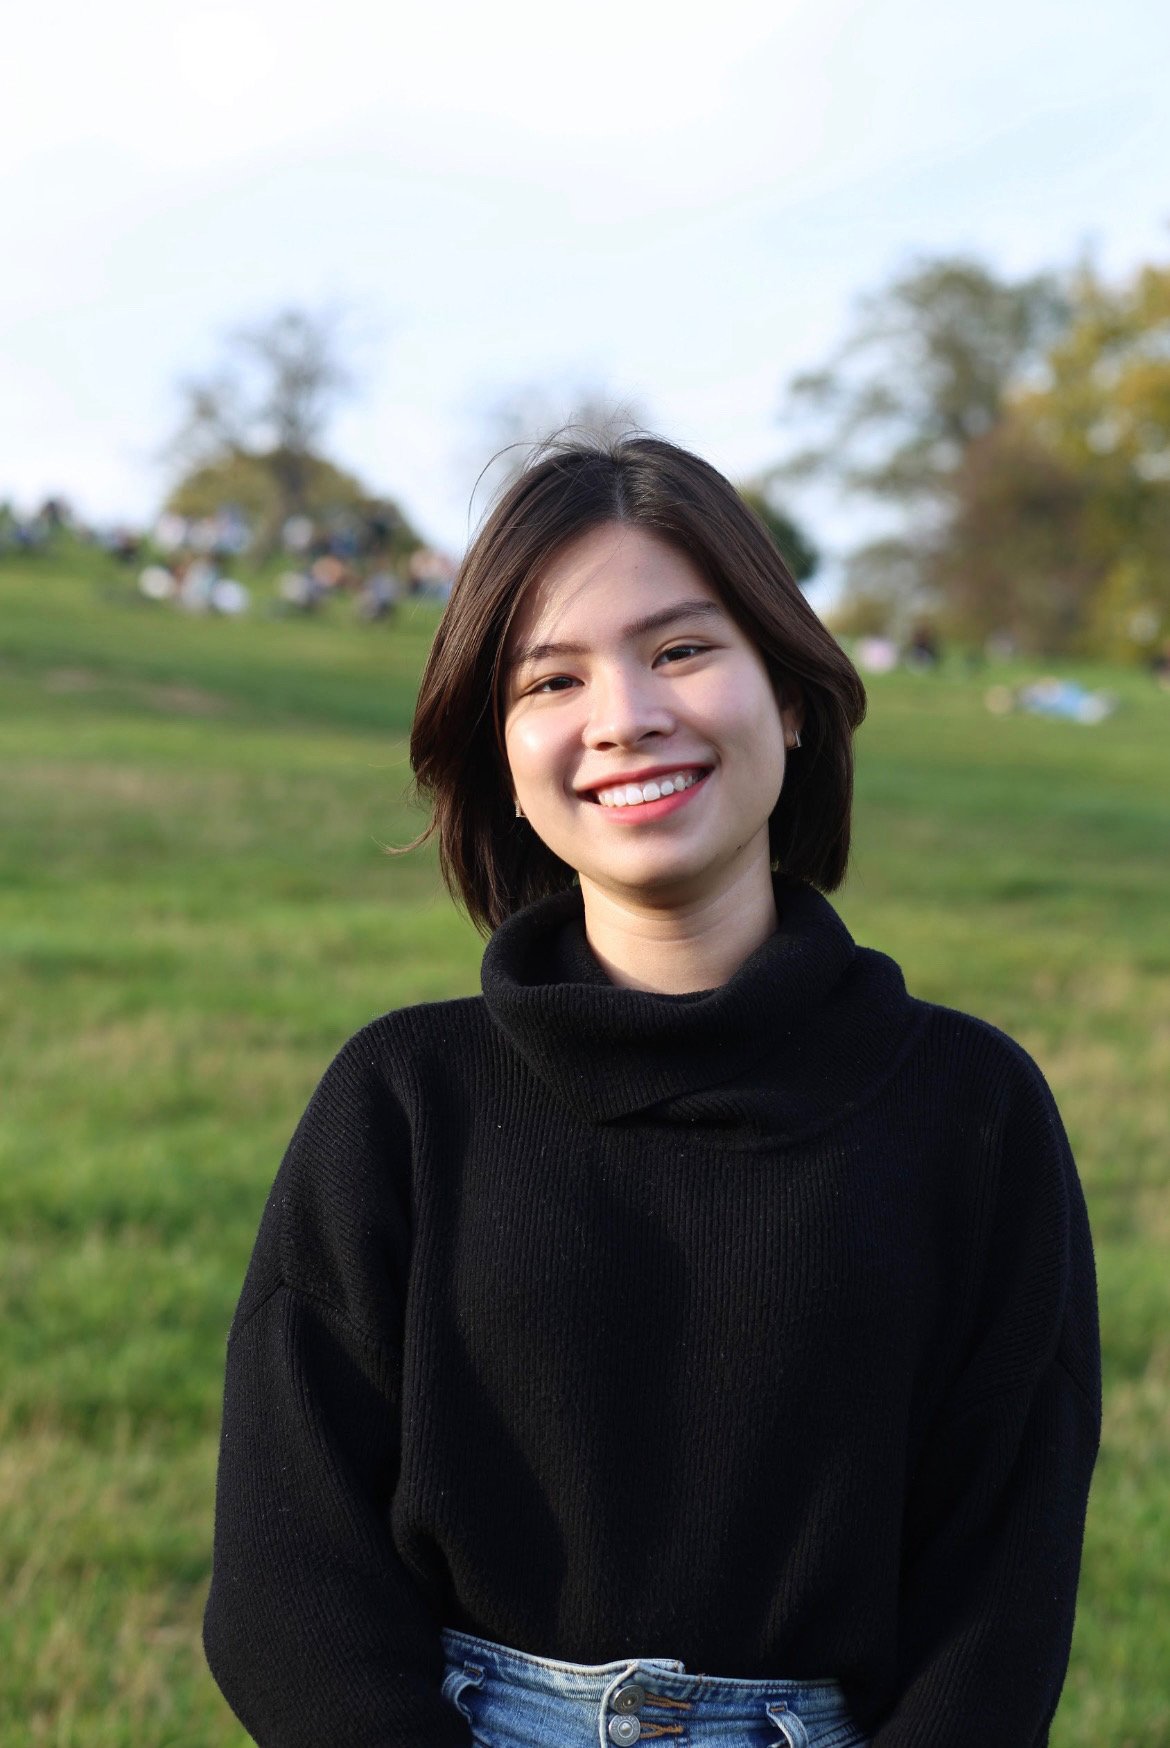 Hà Phương Anh – Versatile Vinser who is now leader of the Vietnamese Student Association in the UK (SVUK)